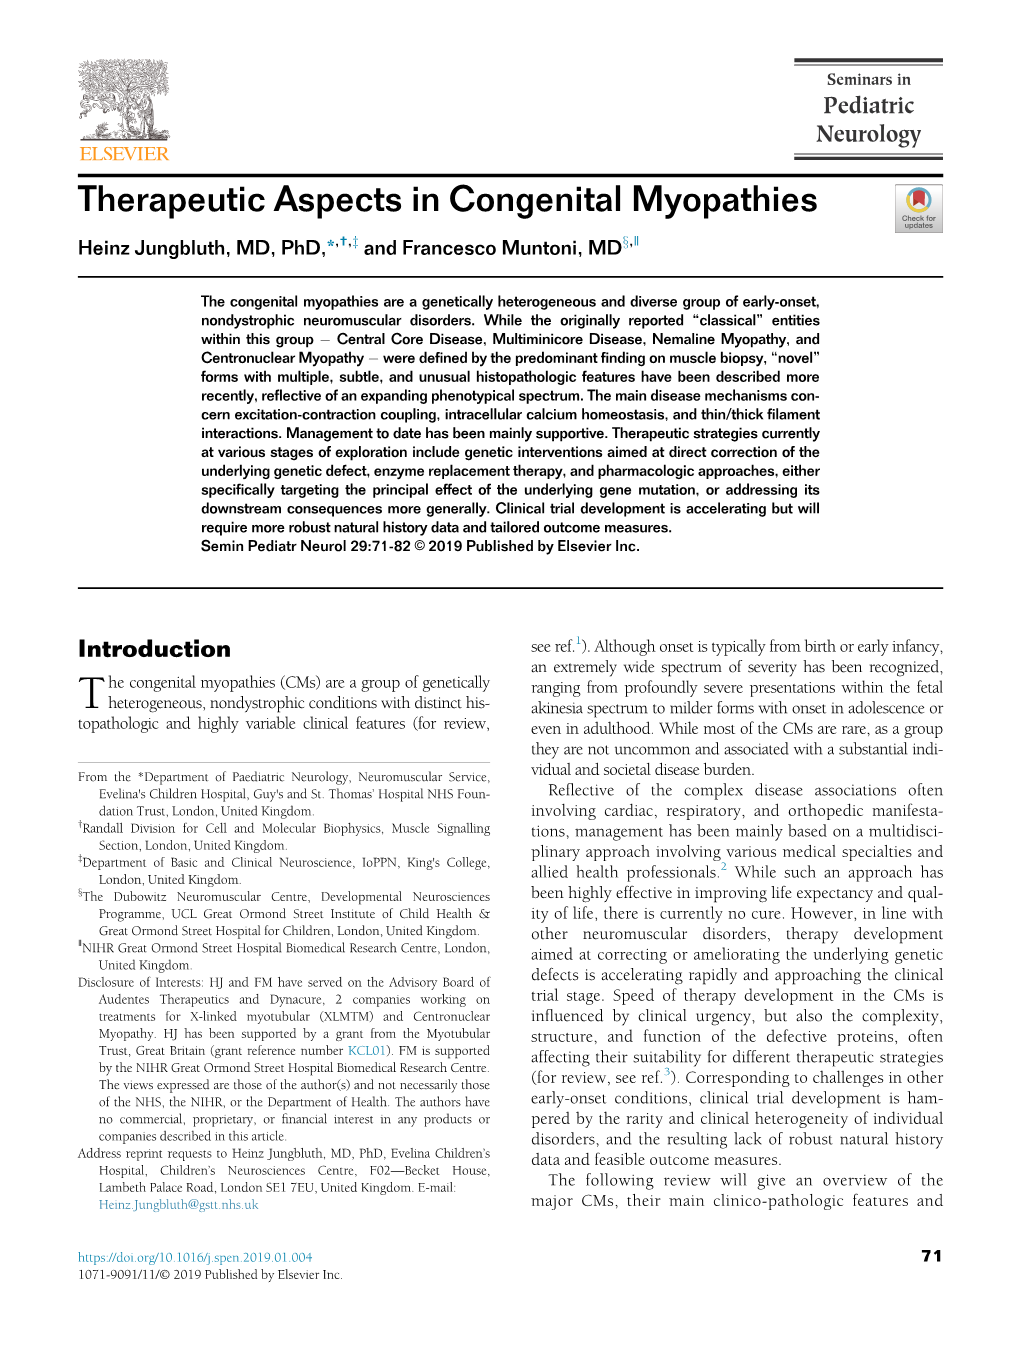 Therapeutic Aspects in Congenital Myopathies Heinz Jungbluth, MD, Phd,*,†,Z and Francesco Muntoni, Mdx,ǁ